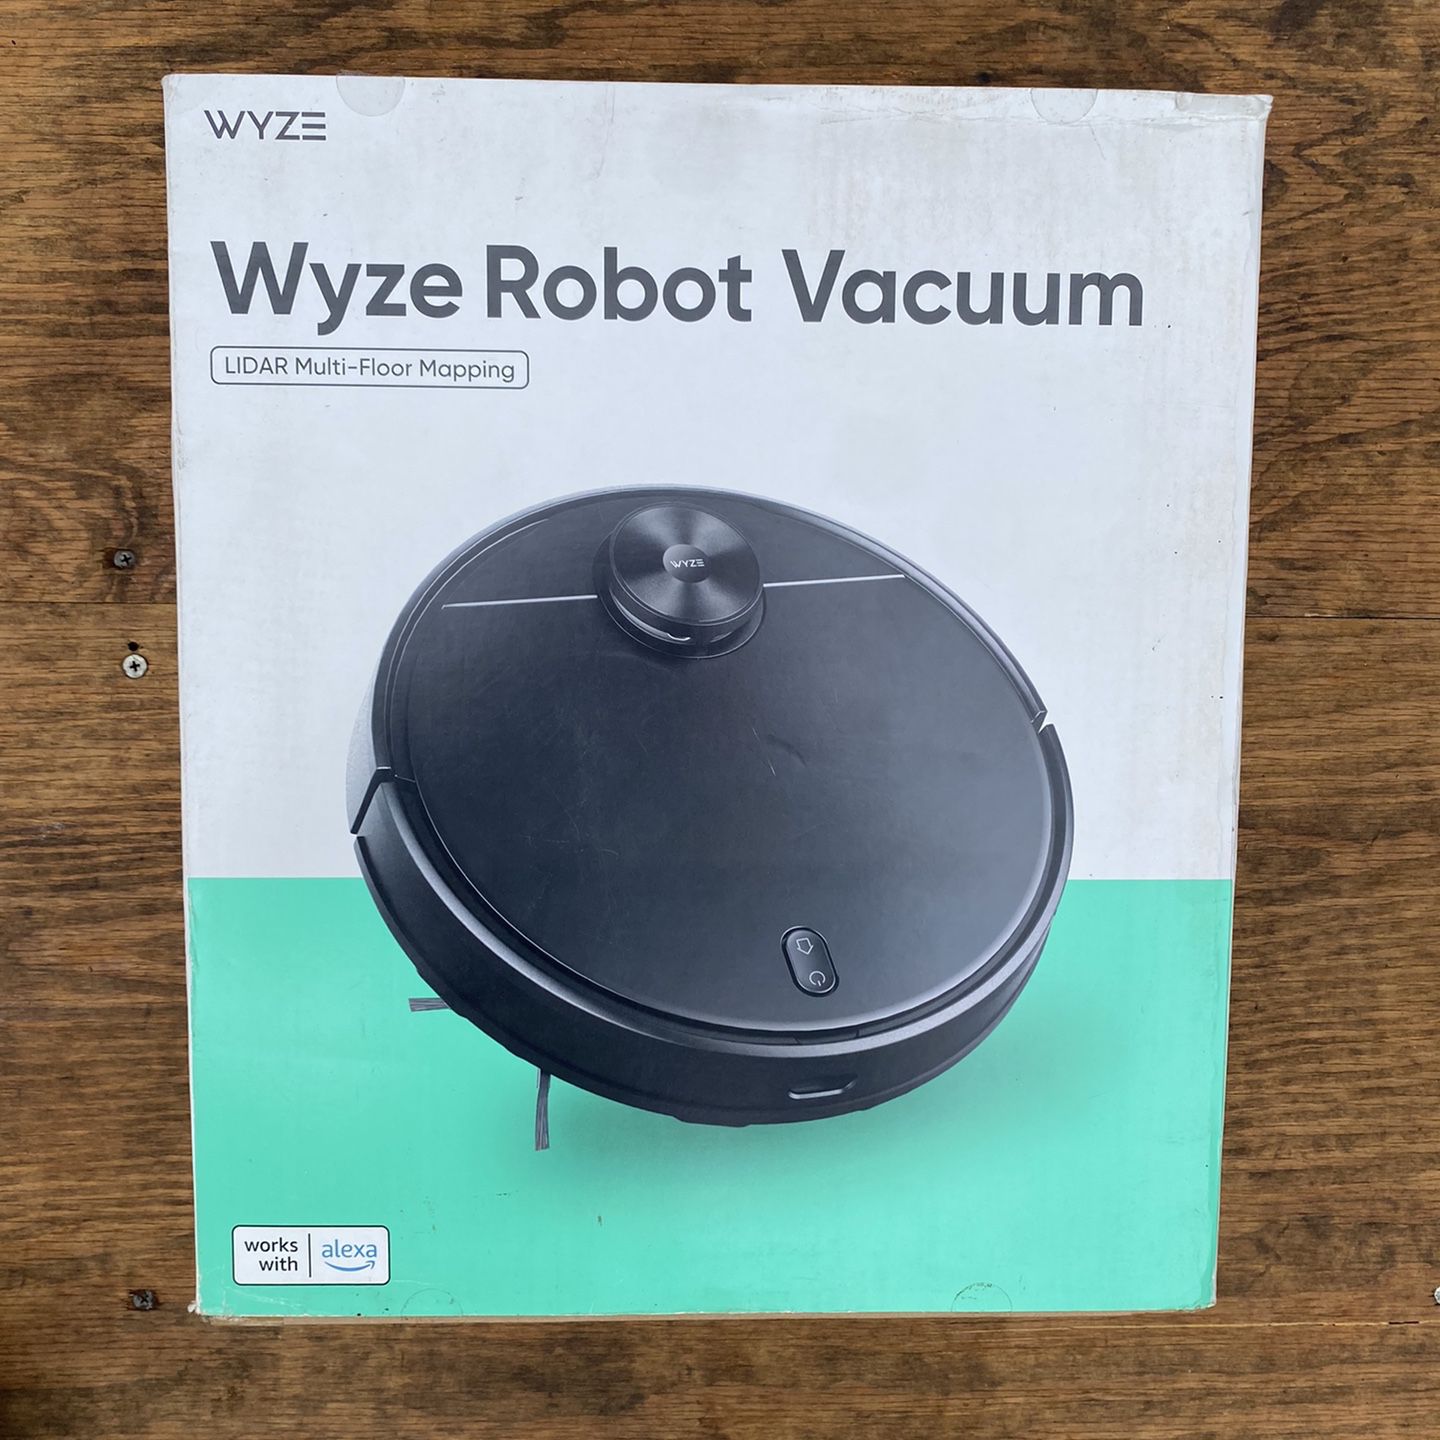 Wyze Robot Vacuum 